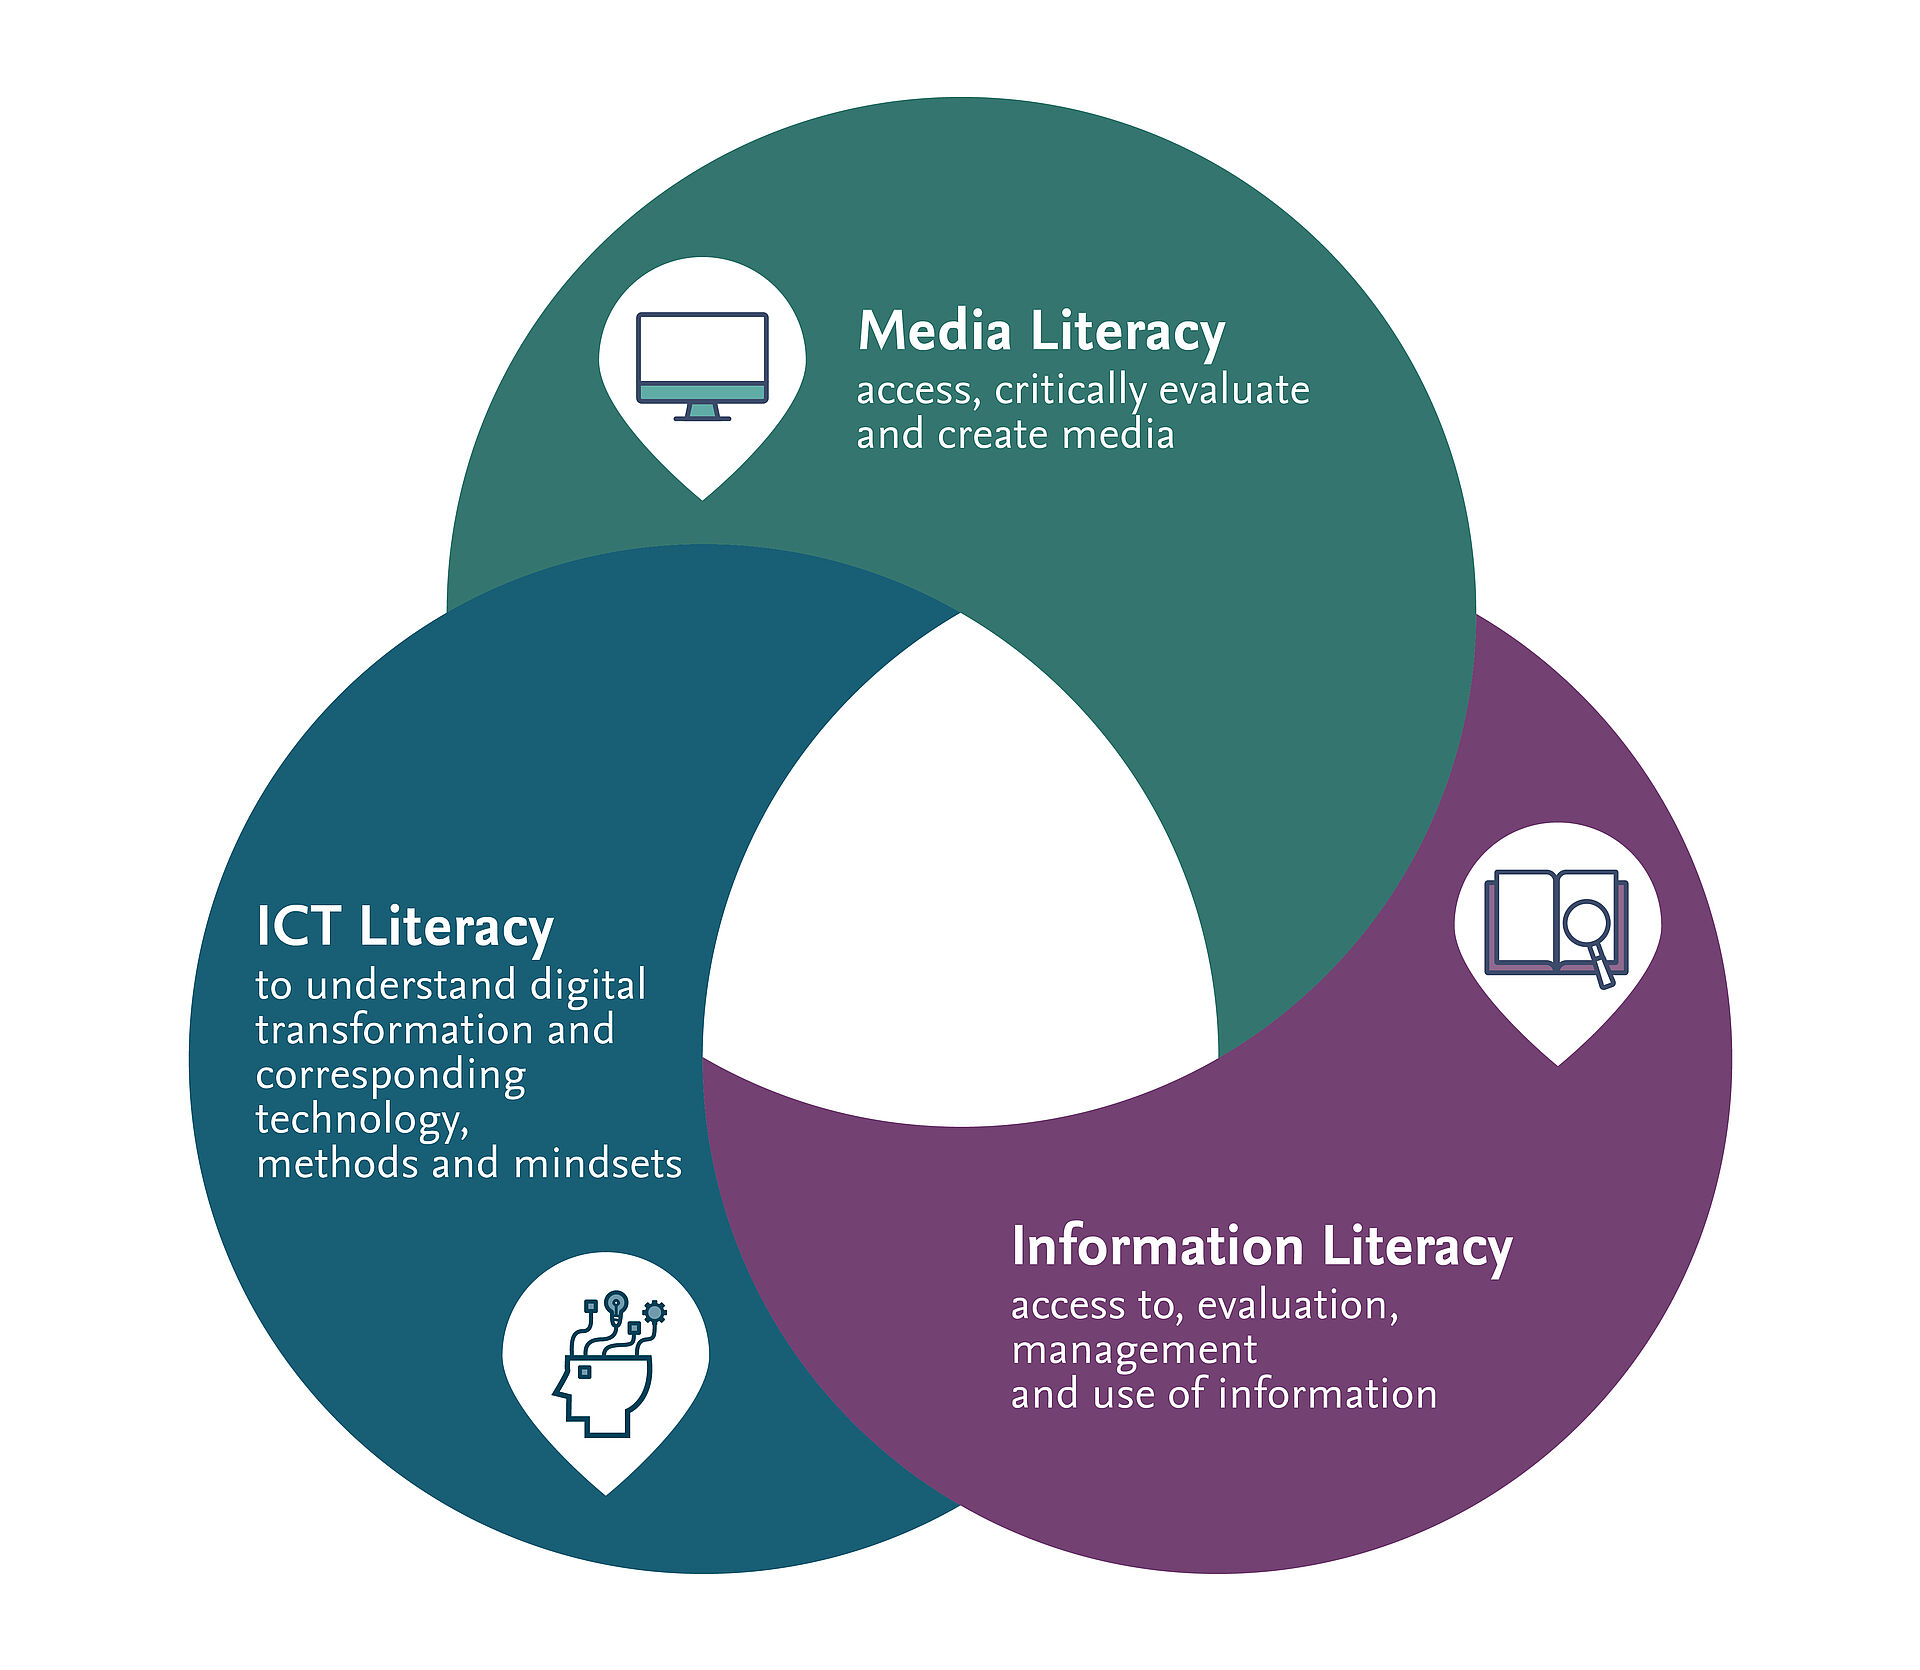 Digital Literacy Zertifikat